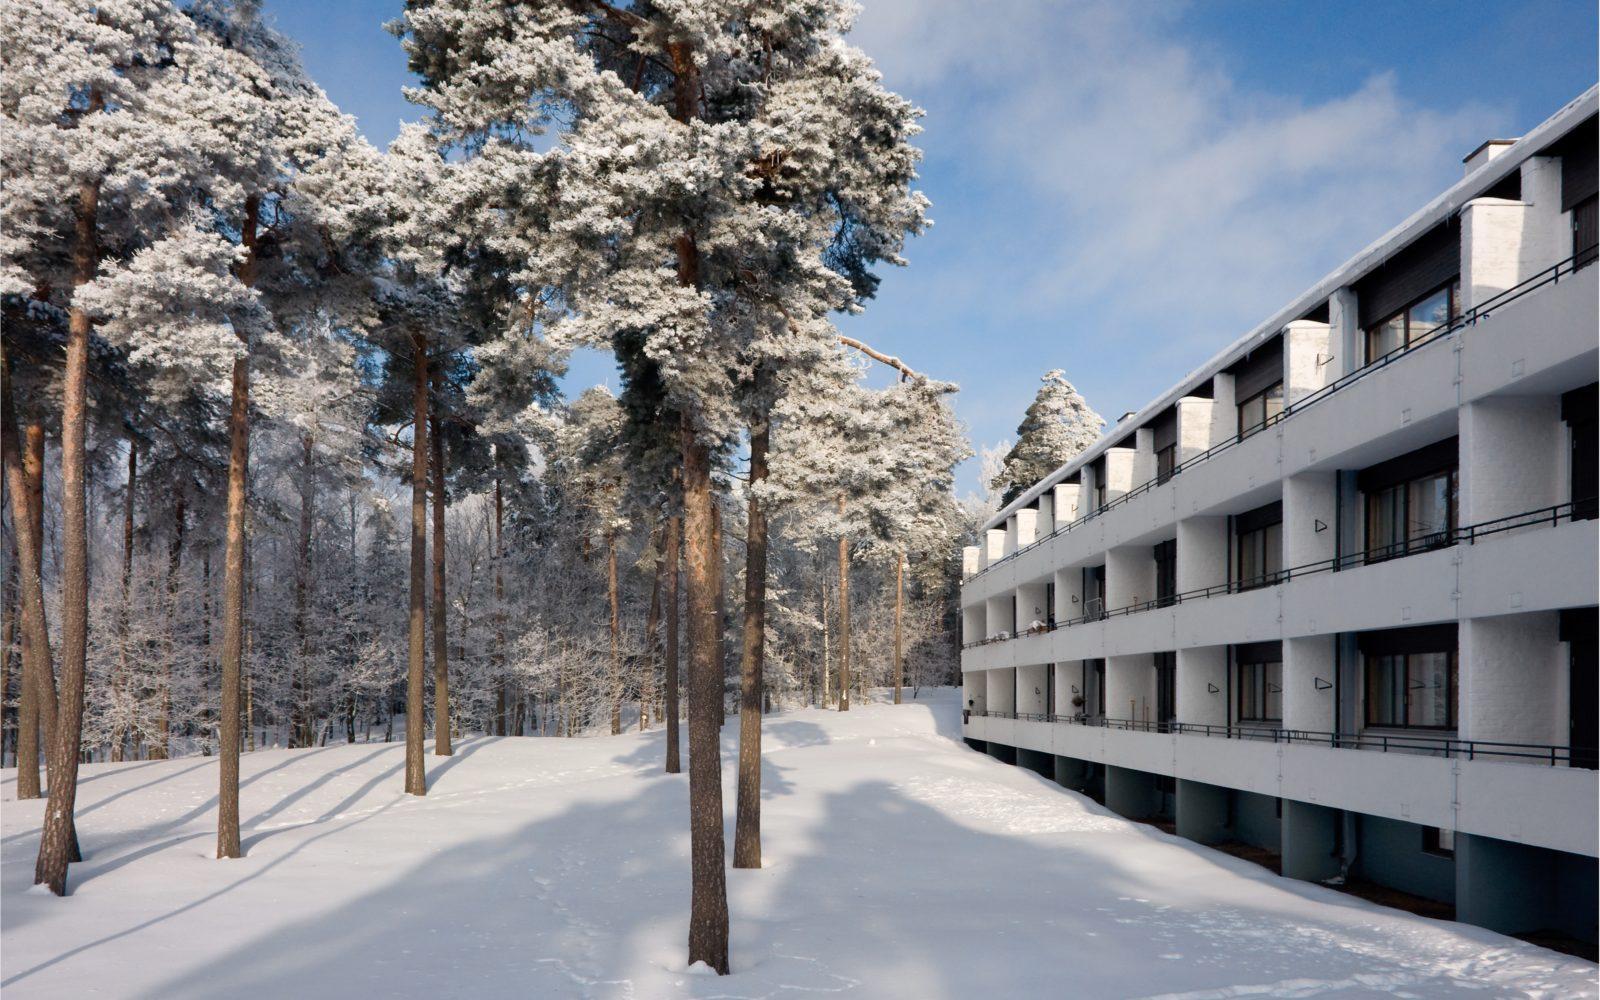 Sunila house Runkola and pine trees in winter photo Rurik Wasastjerna